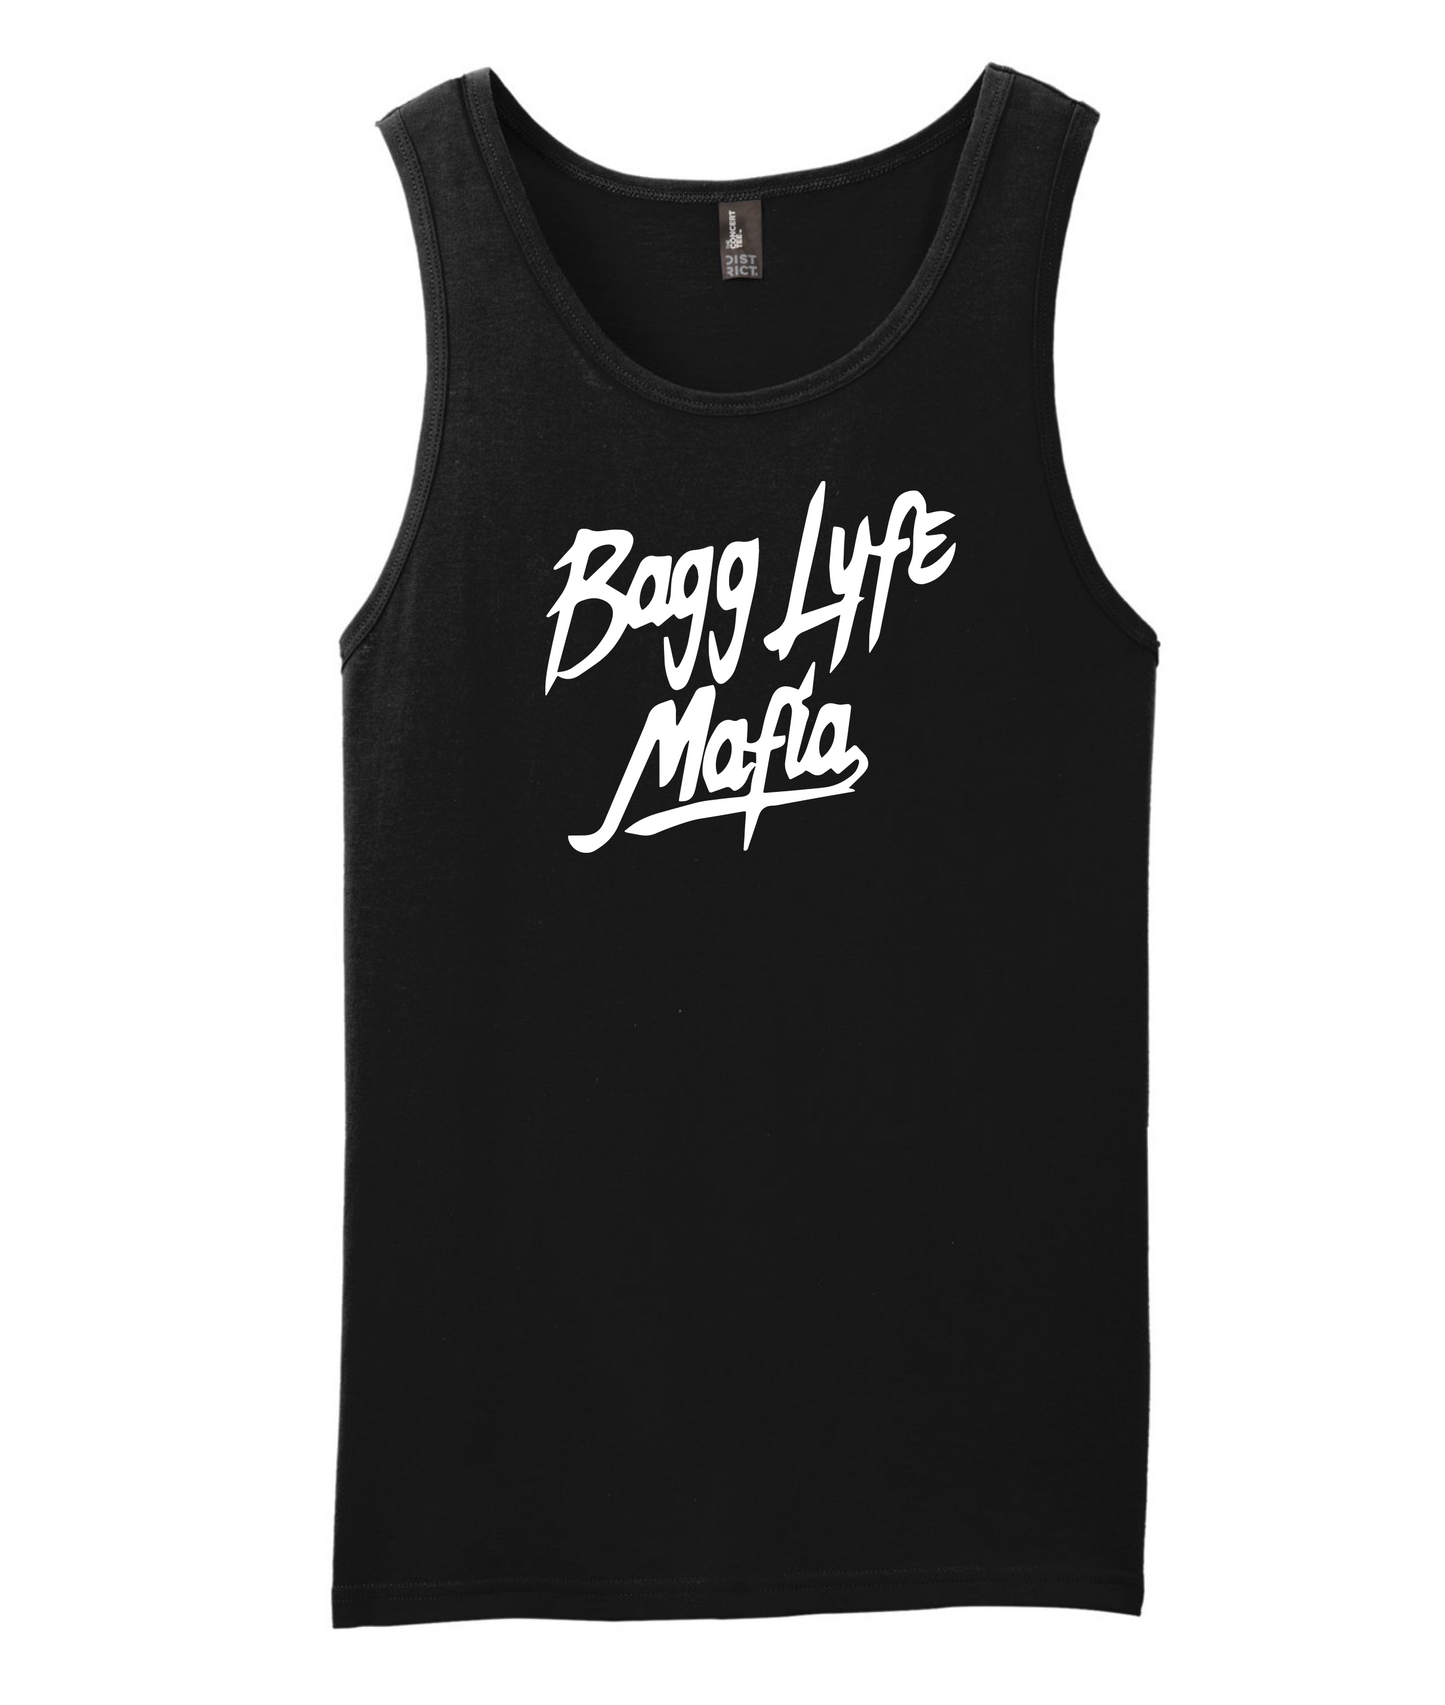 Bagglyfe Mafia Clothing - Logo - Black Tank Top